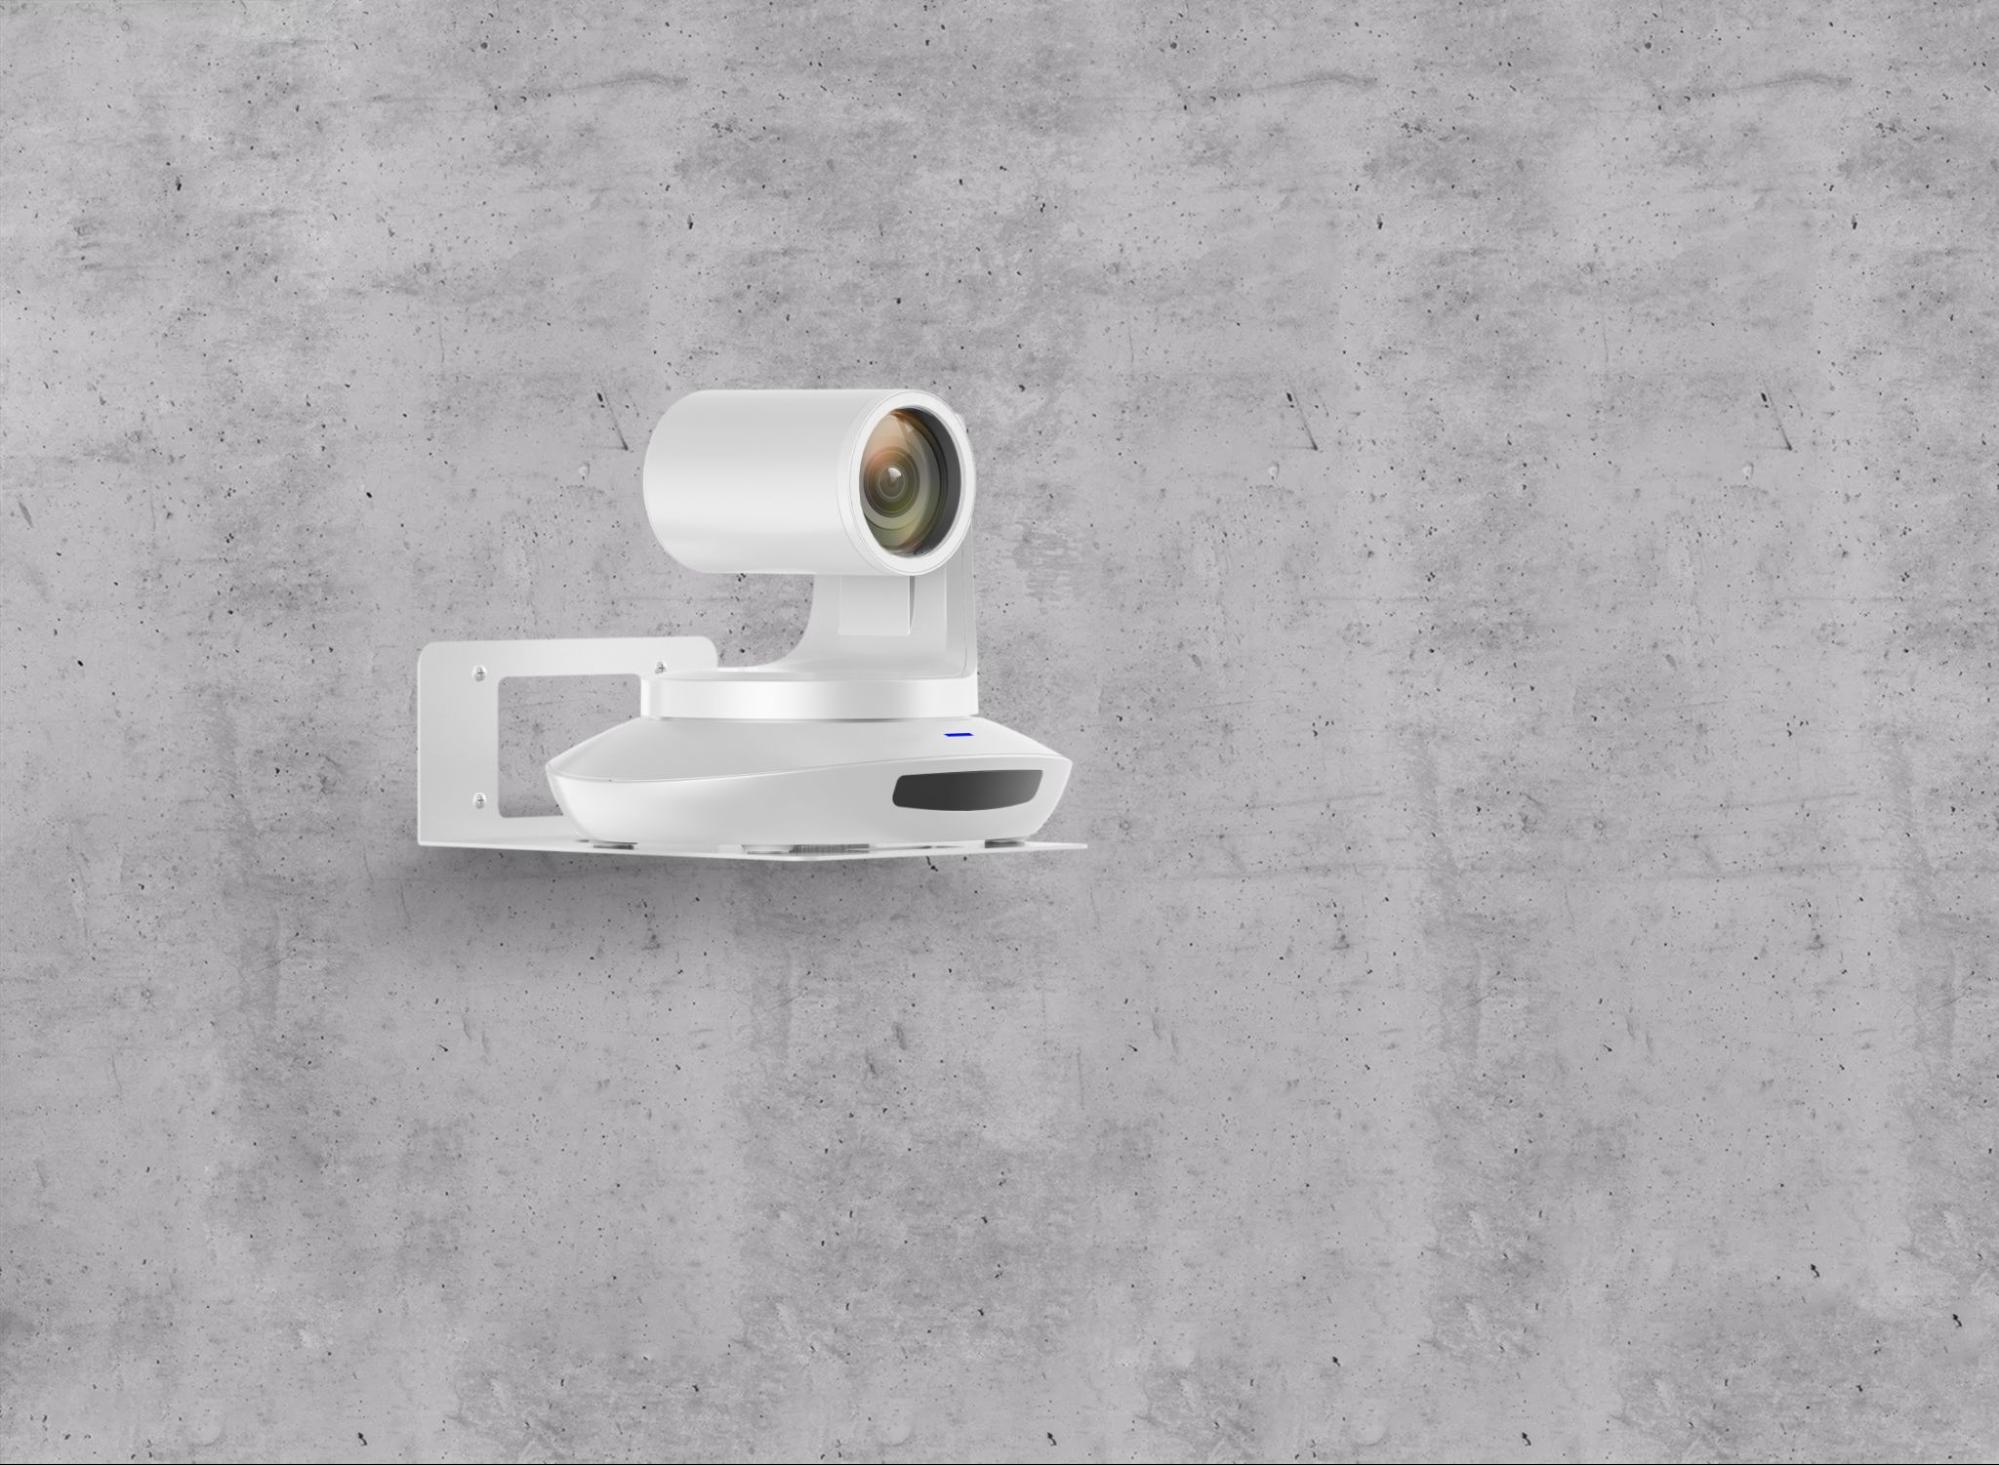 A Telycam wall mount bracket for PTZ cameras